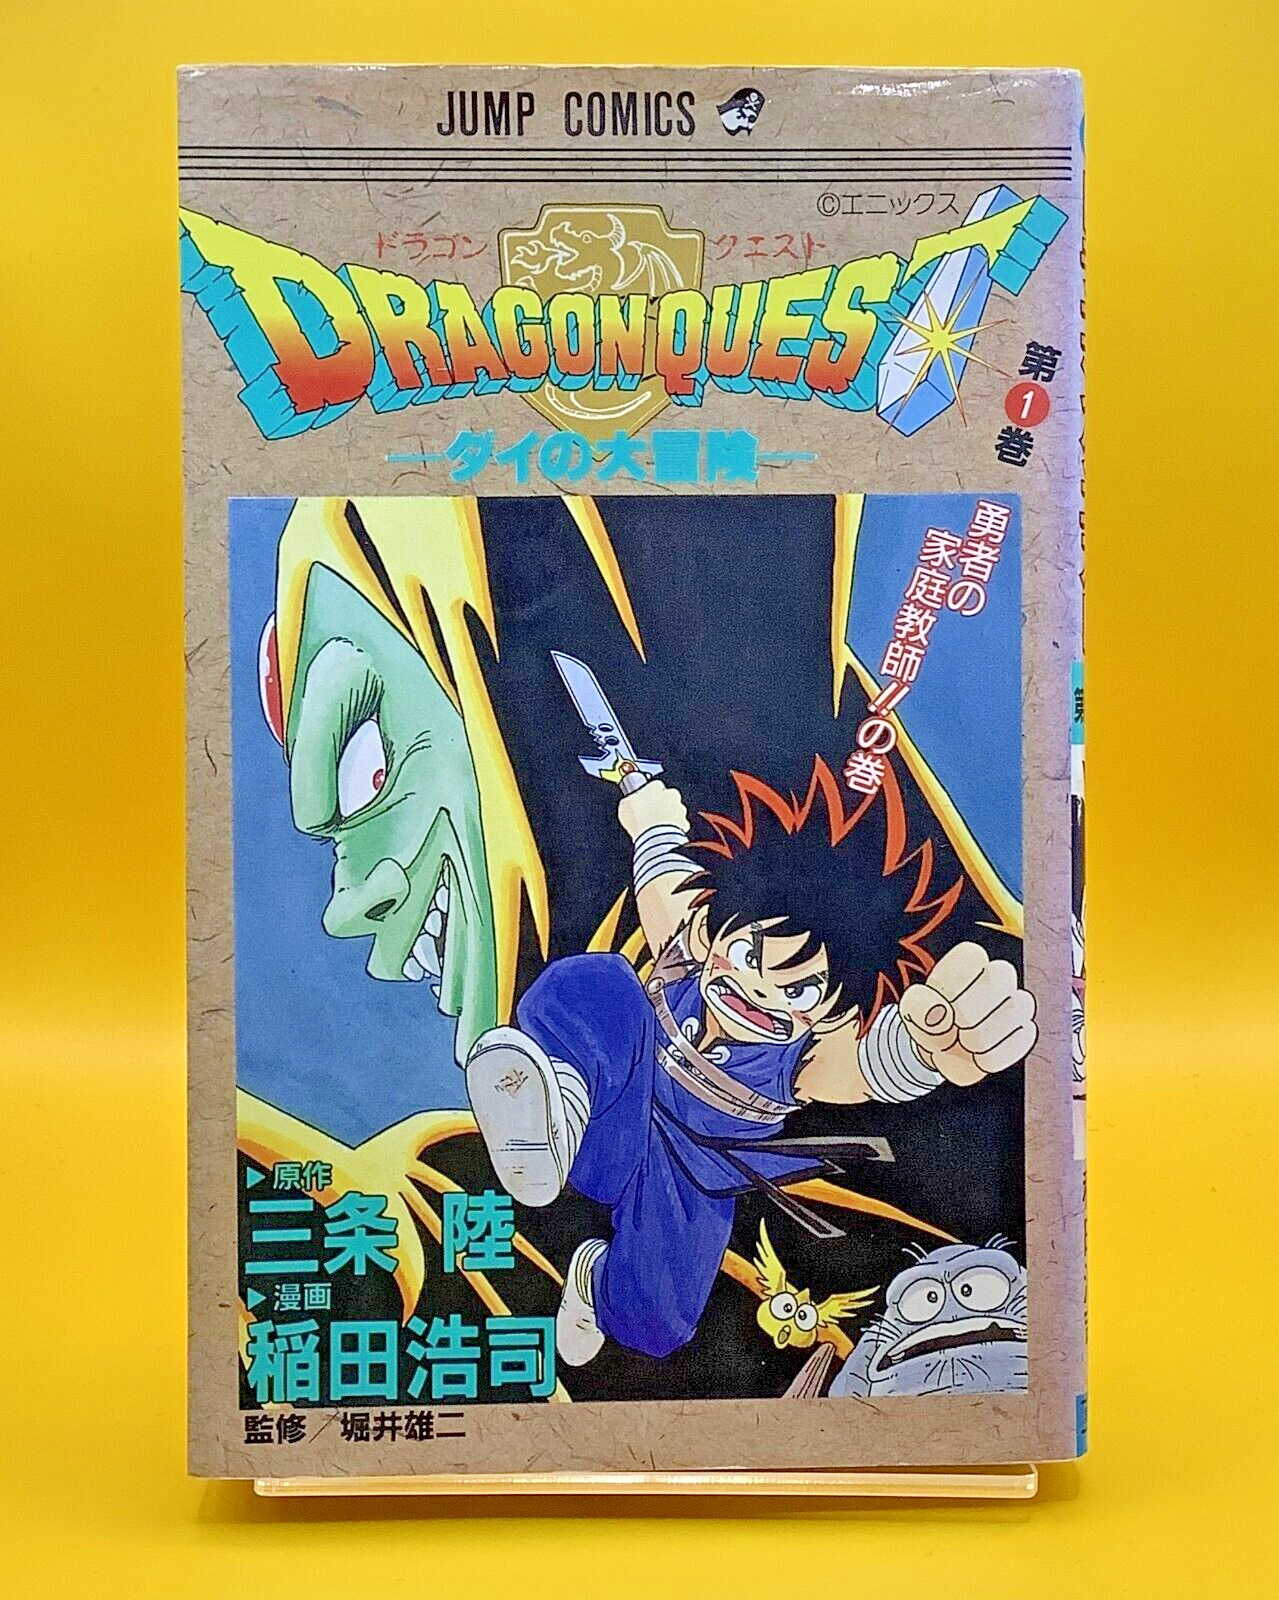 Rare 1st Print Edition Dragon Quest The Adventure of Dai Vol.1 1990 Manga Comics